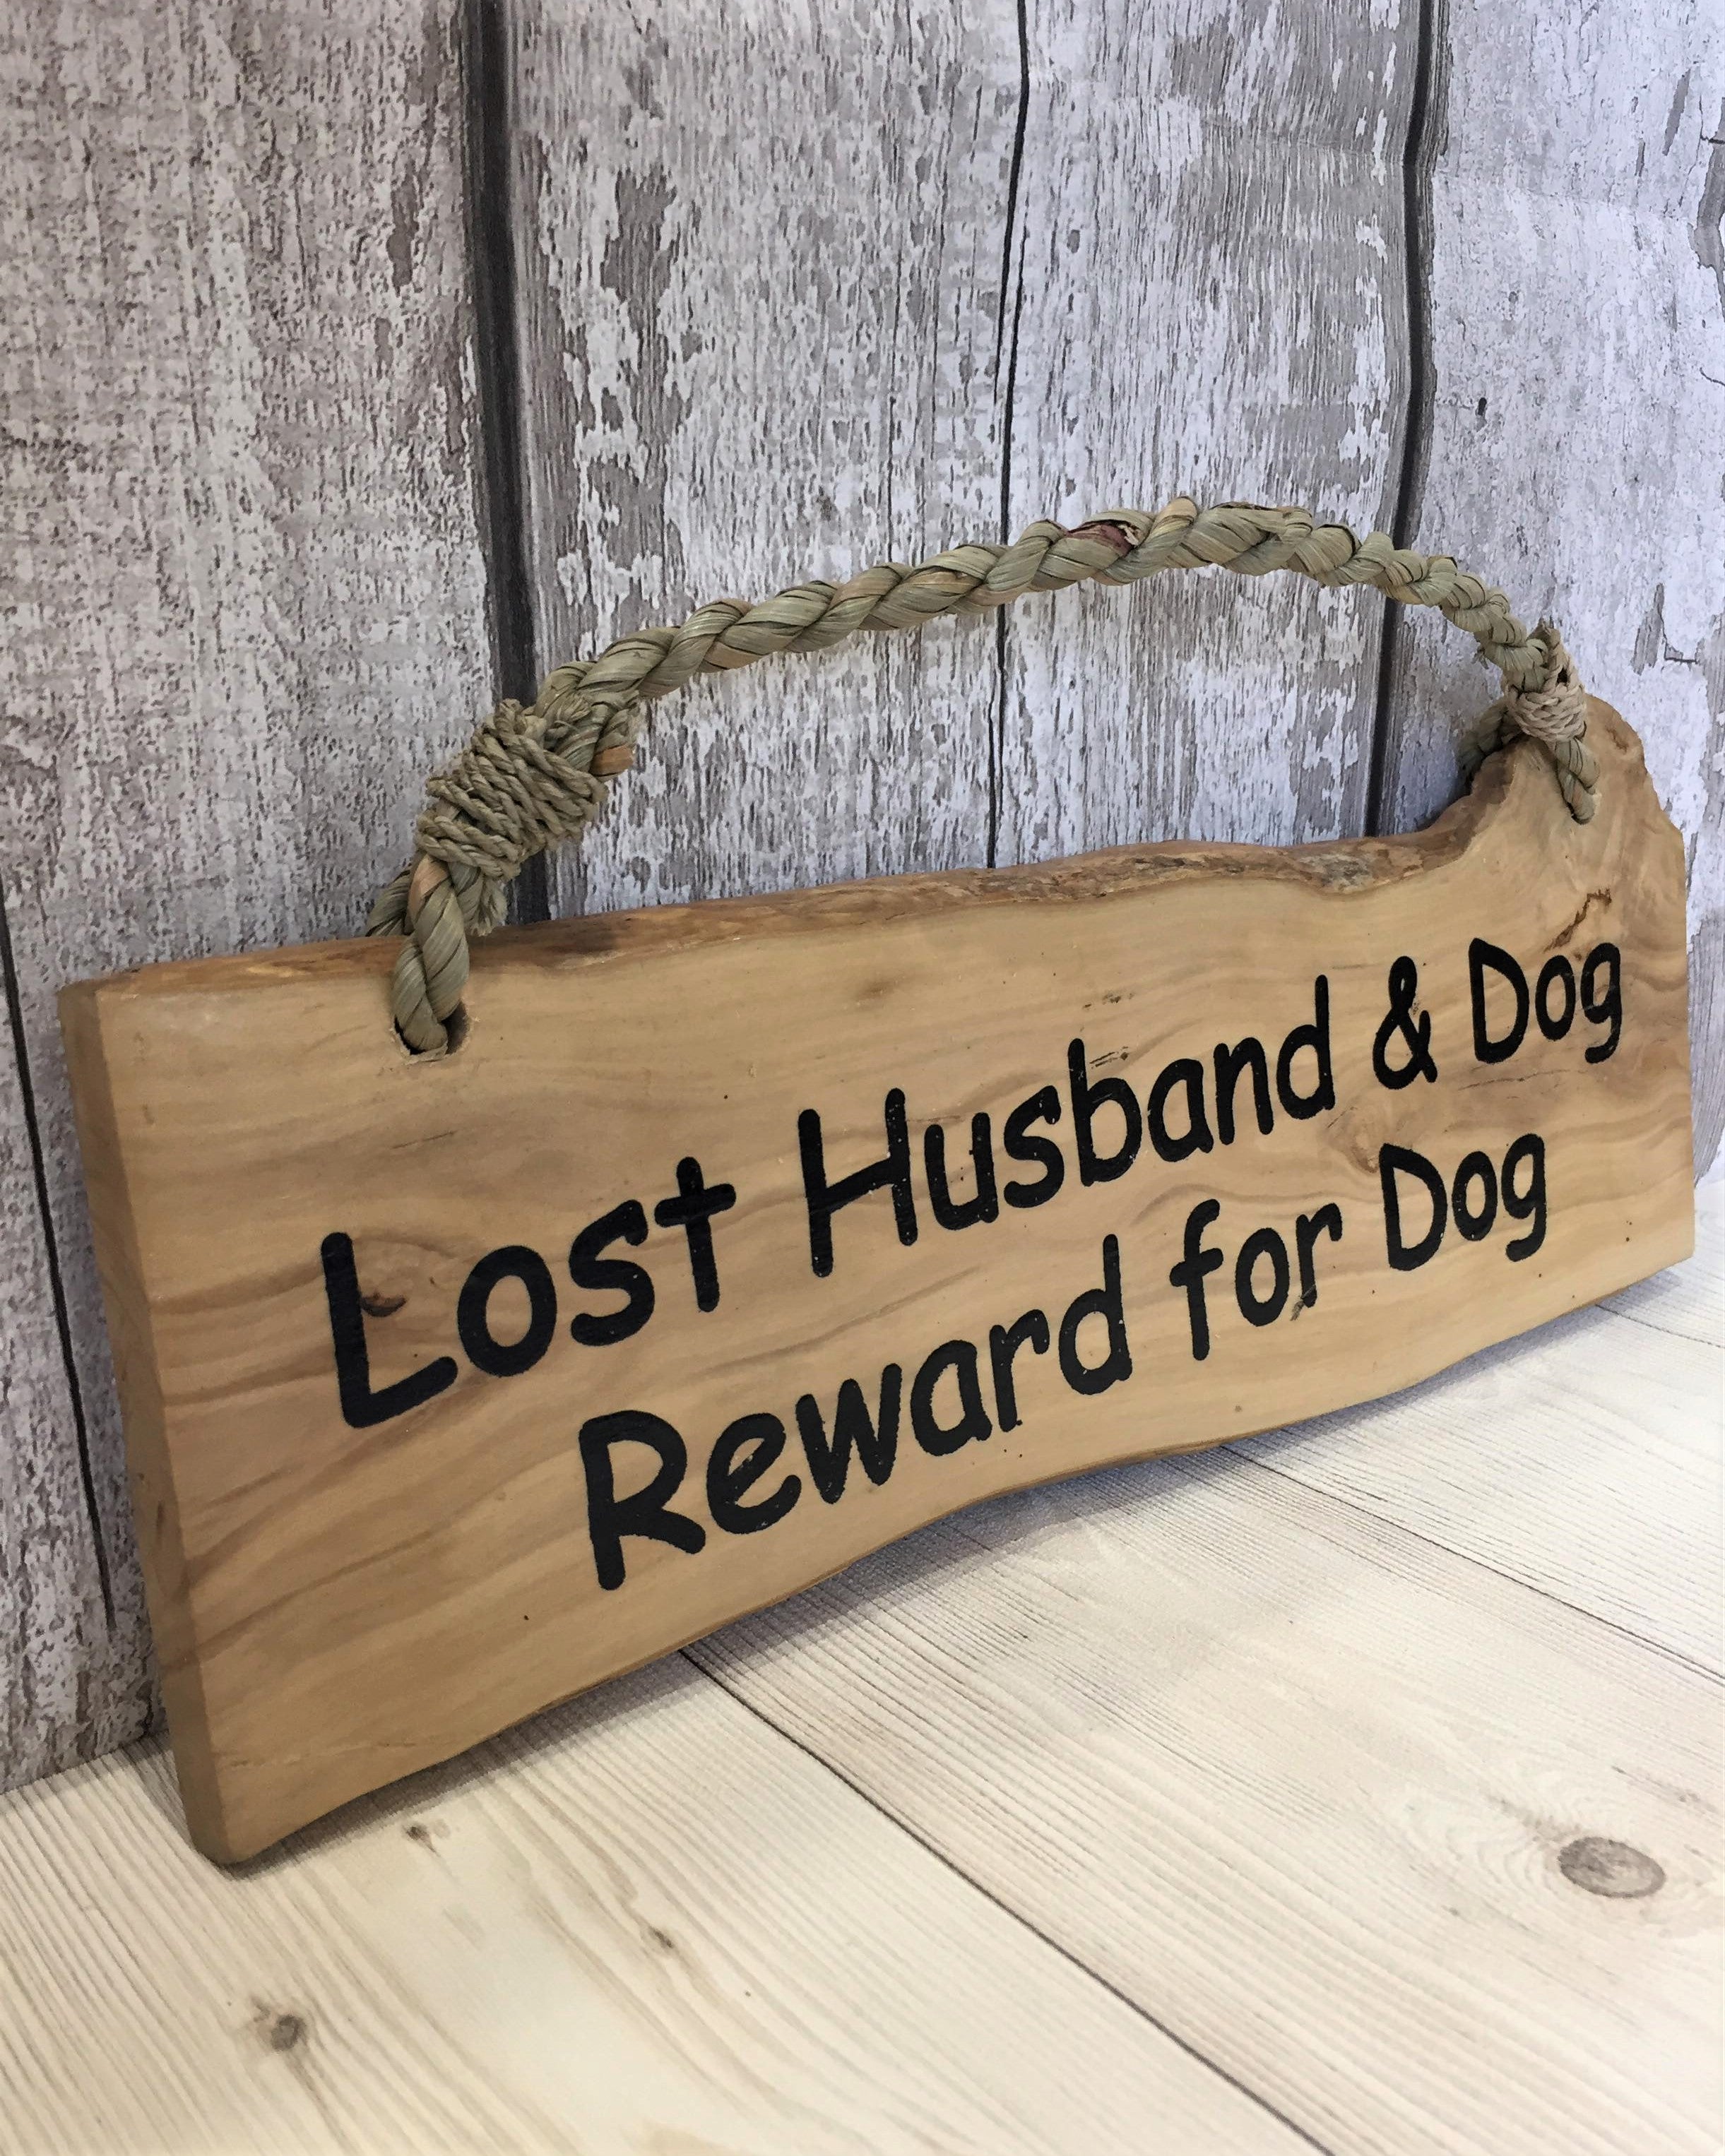 Sign - Lost Husband